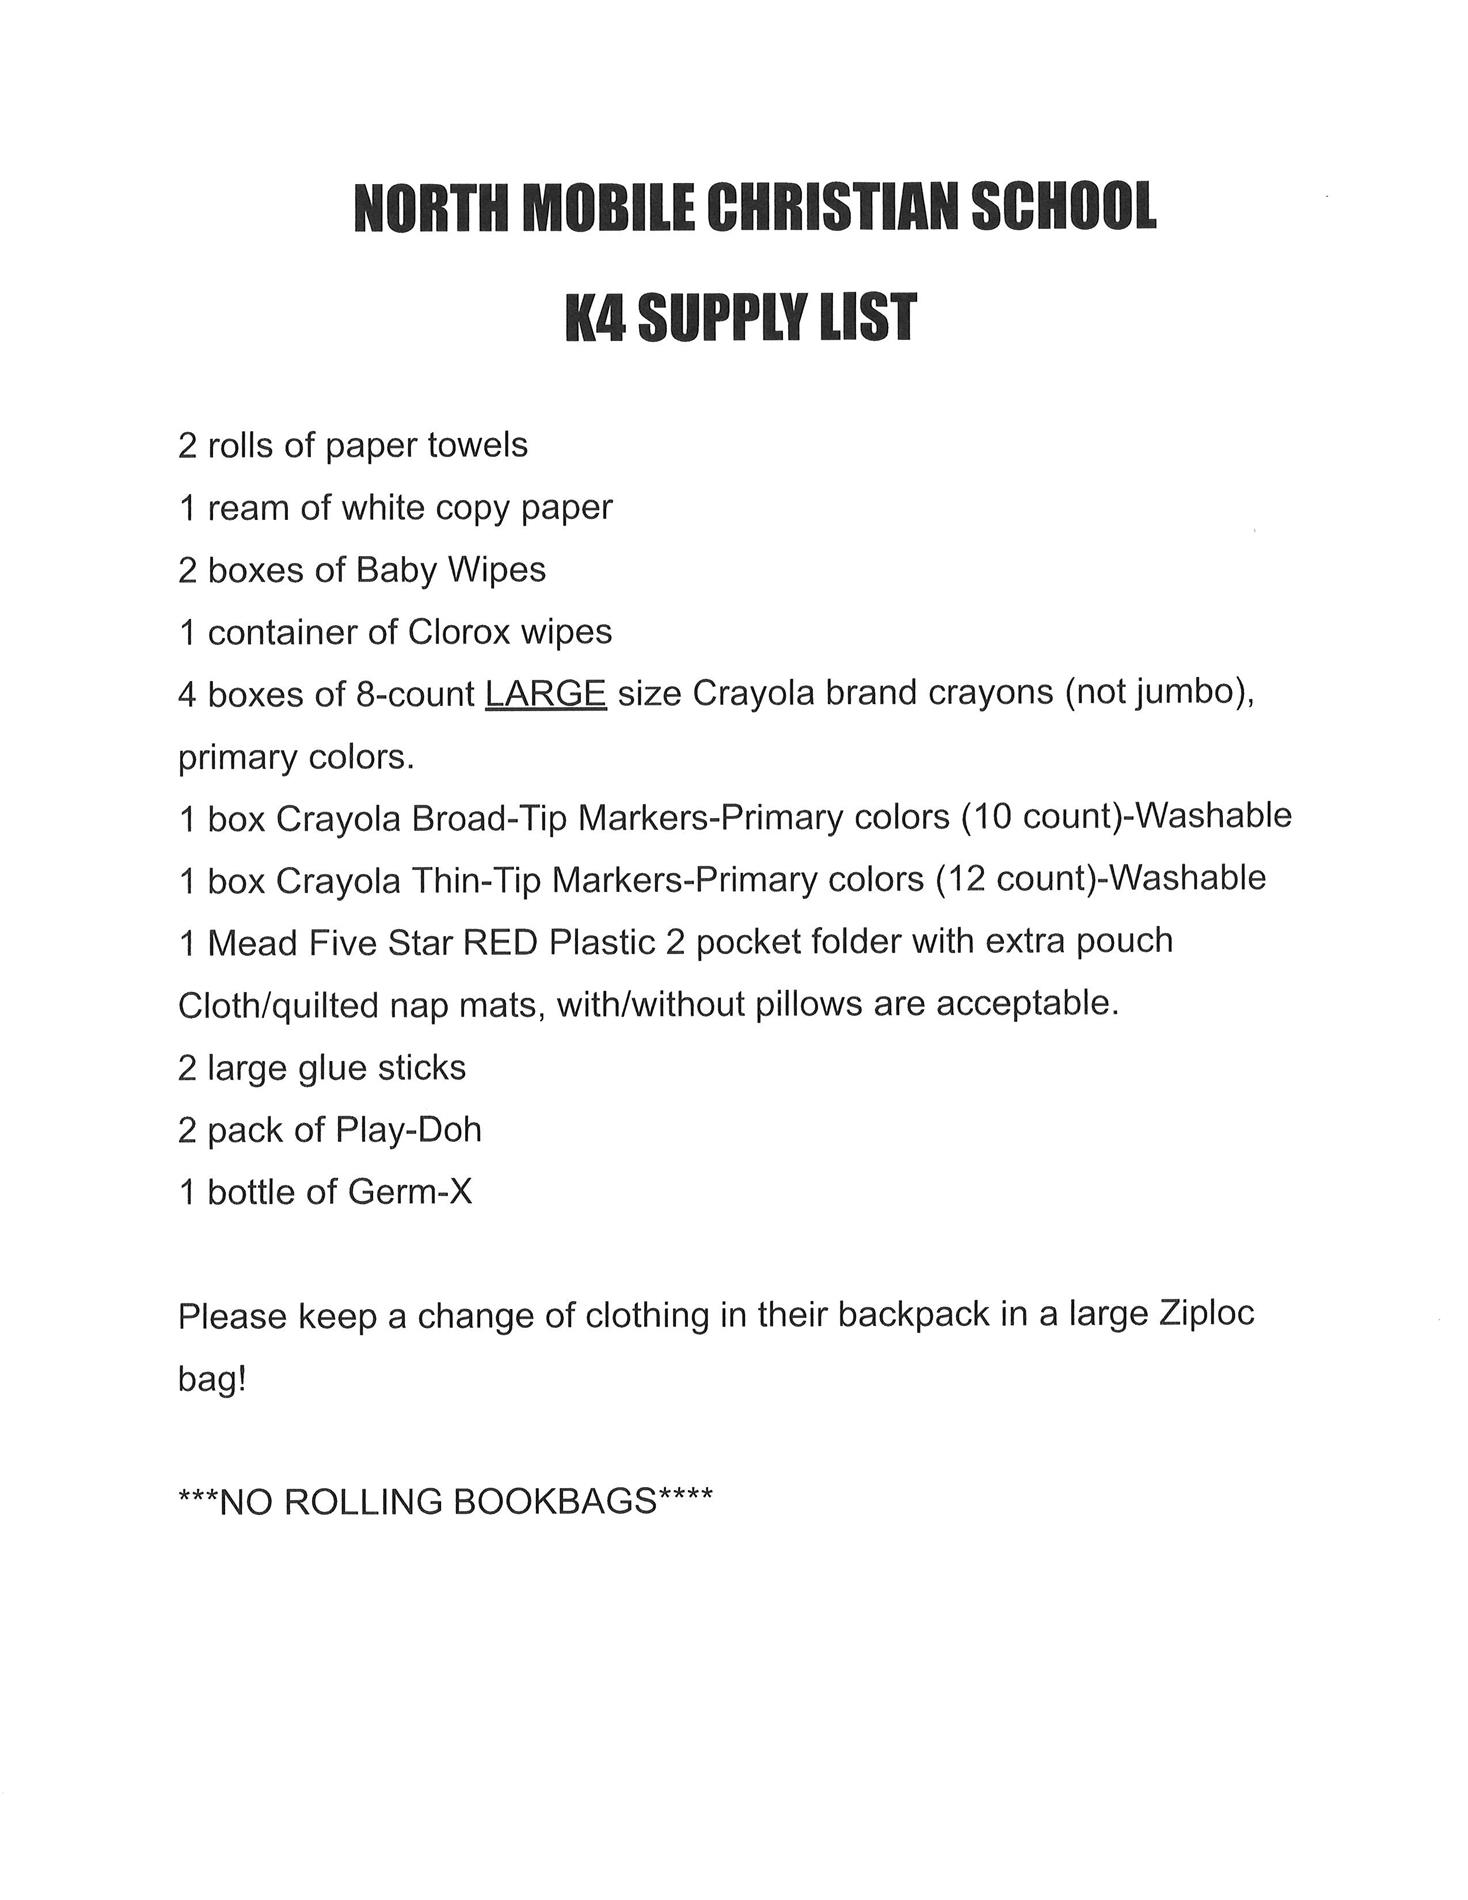 Supply Lists